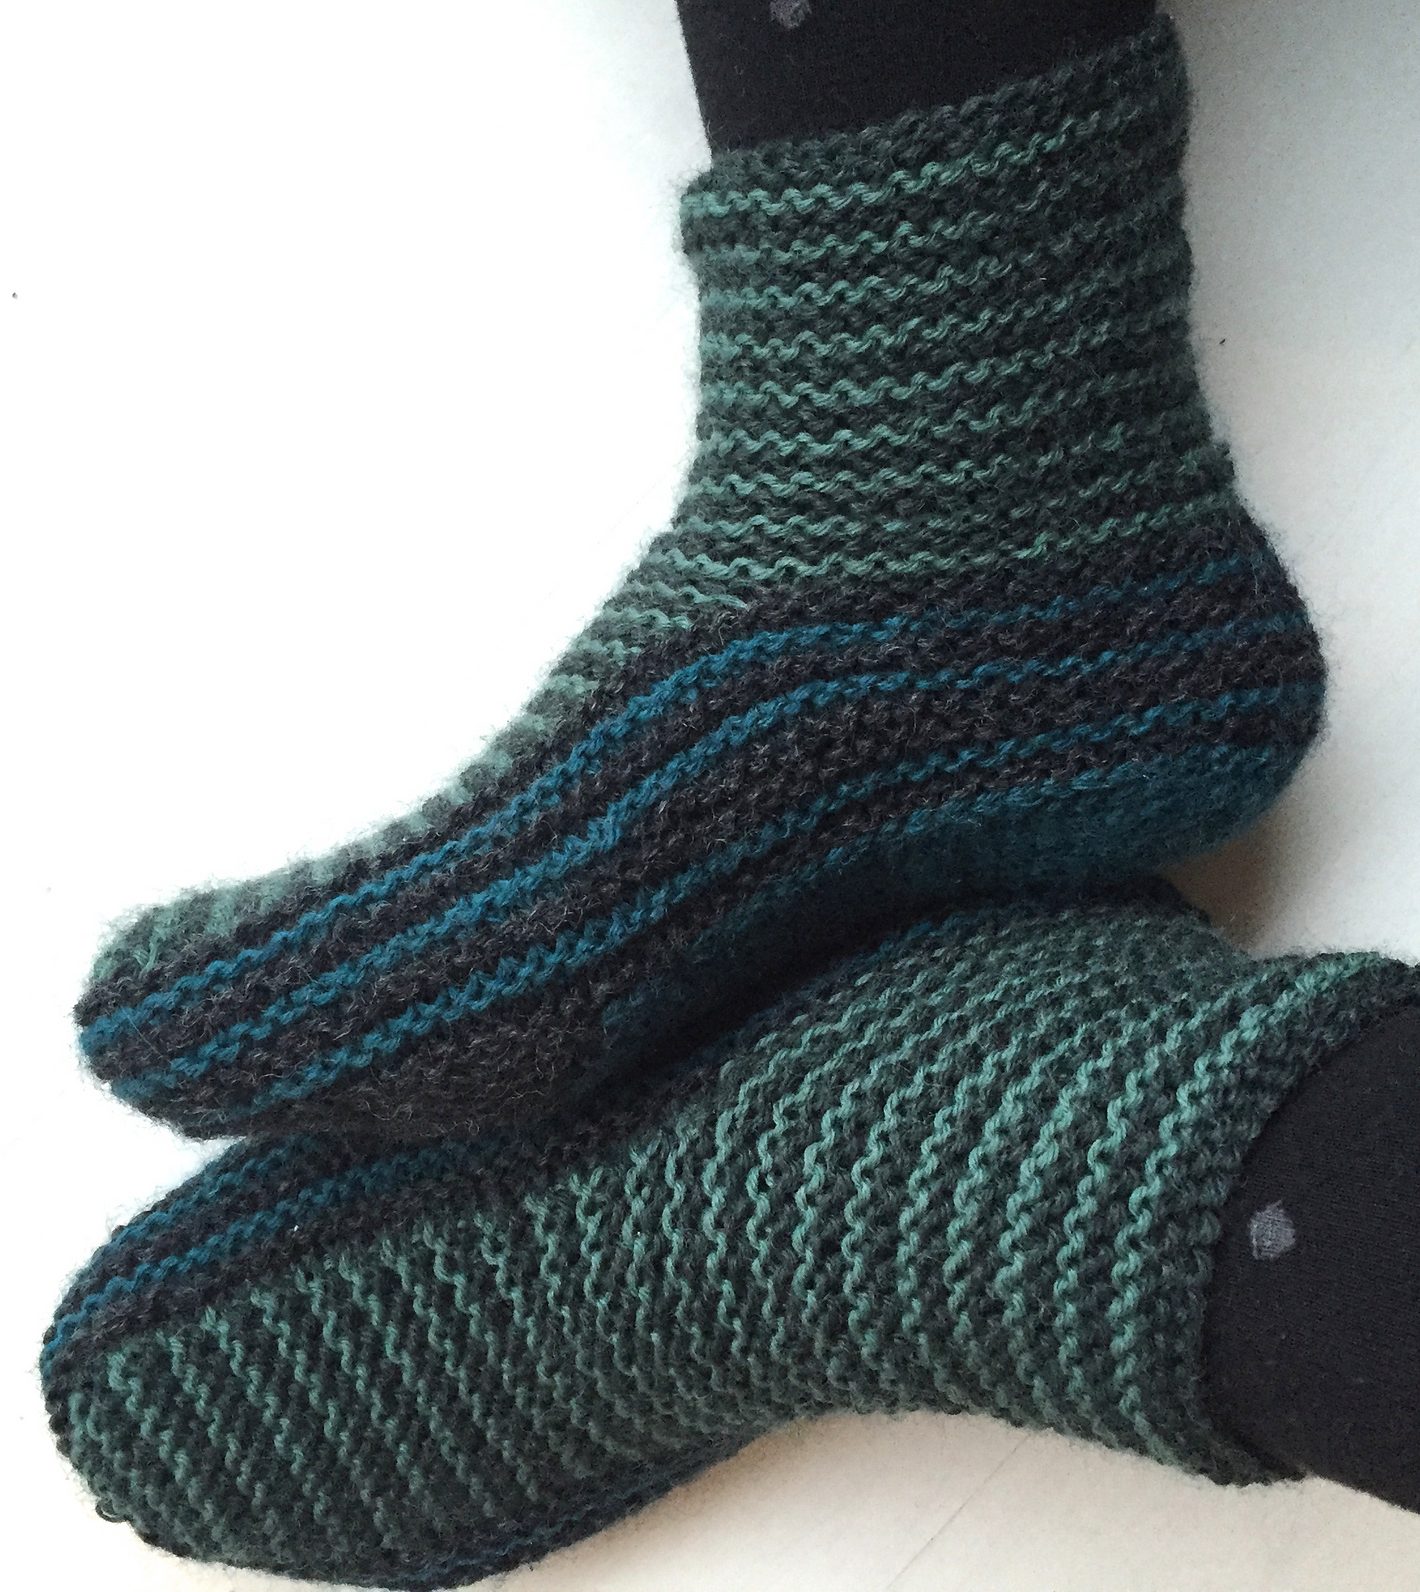 Garter Stitch Knitting Patterns | In the Loop Knitting